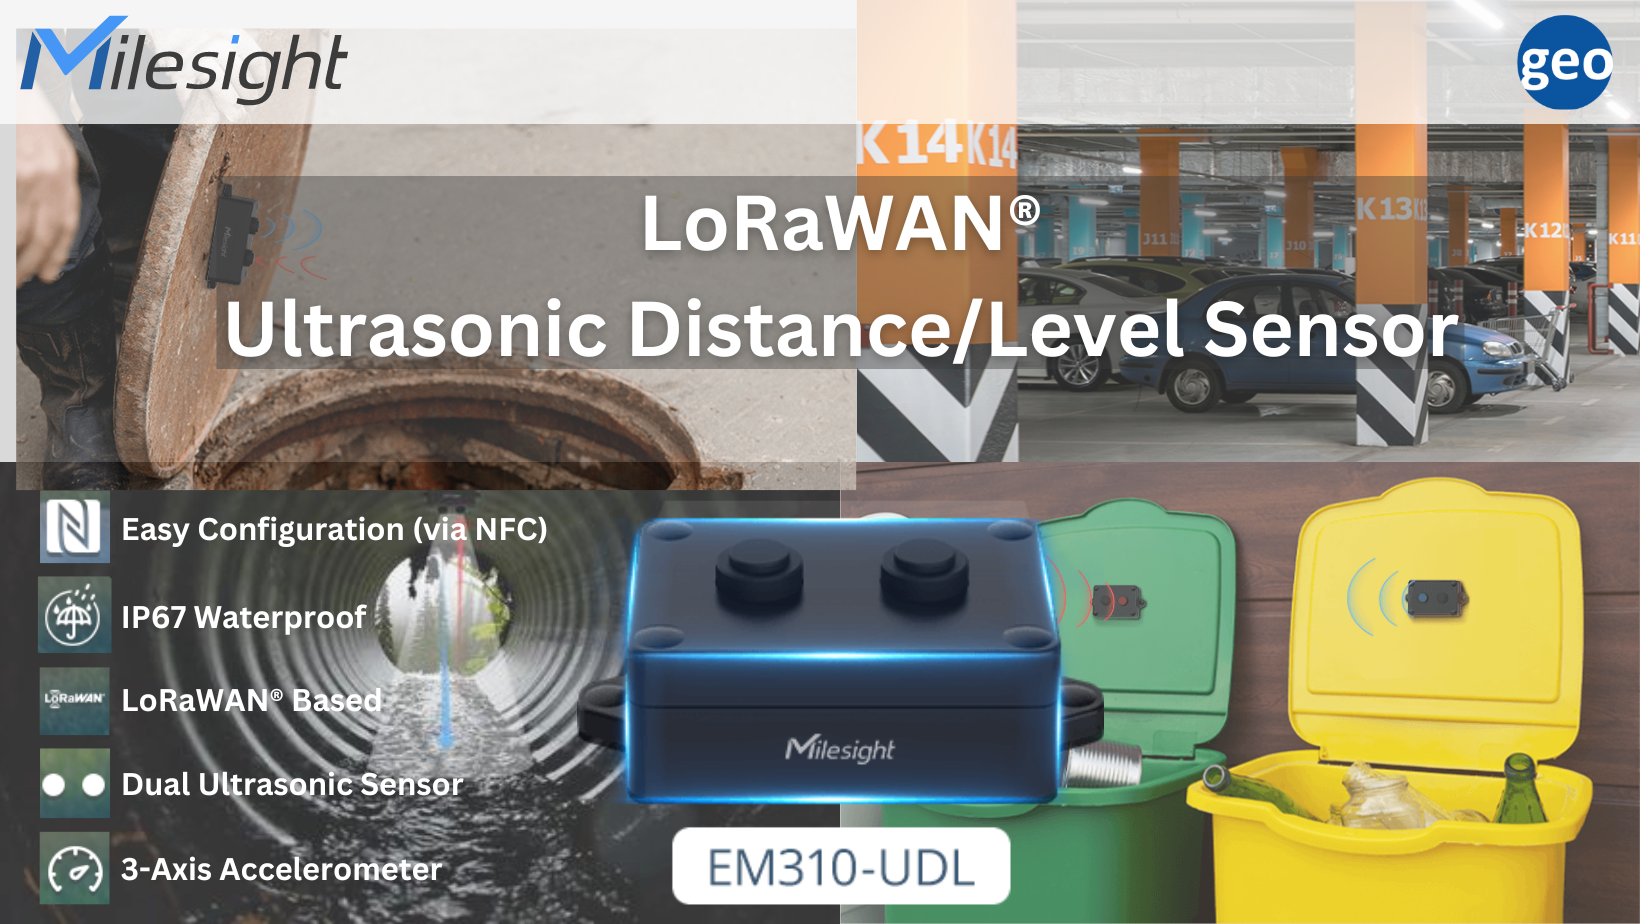 Milesight: EM310-ULD Ultrasonic Distance/Level Sensor